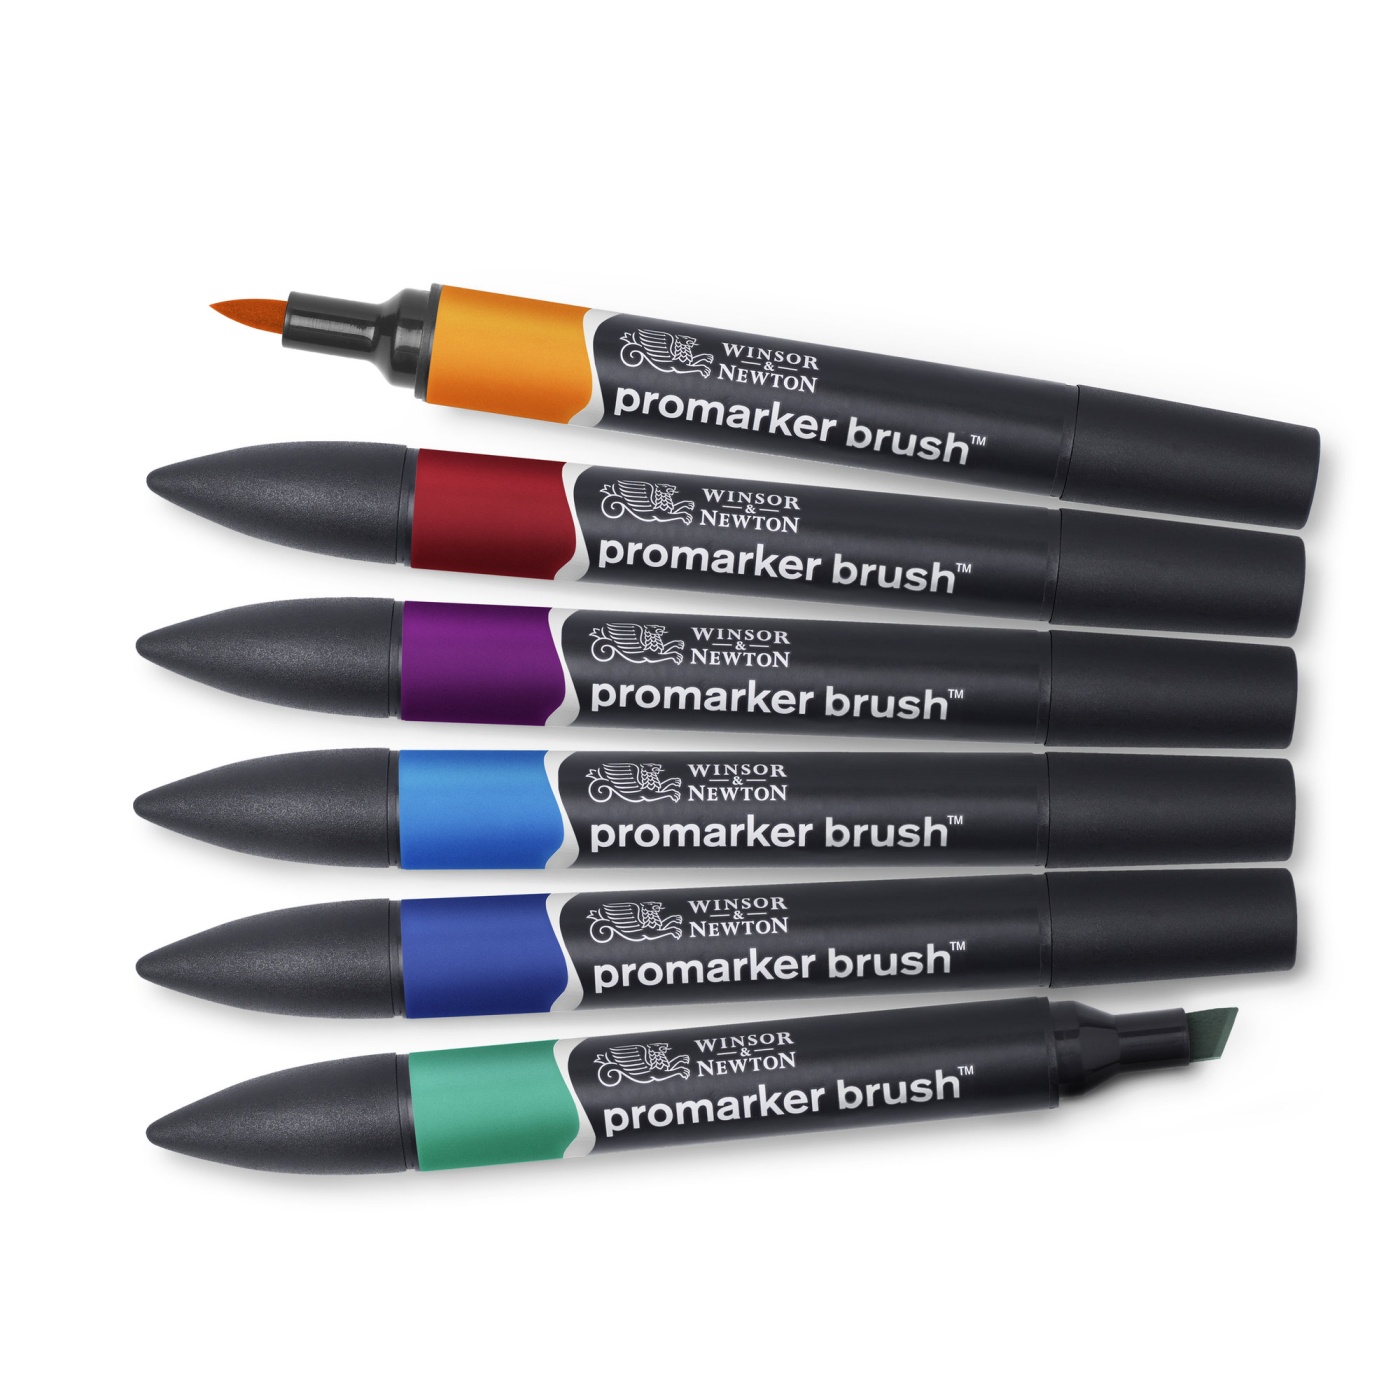 ProMarker Brush 6er-Set Rich Tones in der Gruppe Stifte / Künstlerstifte / Illustrationsmarker bei Pen Store (100554)